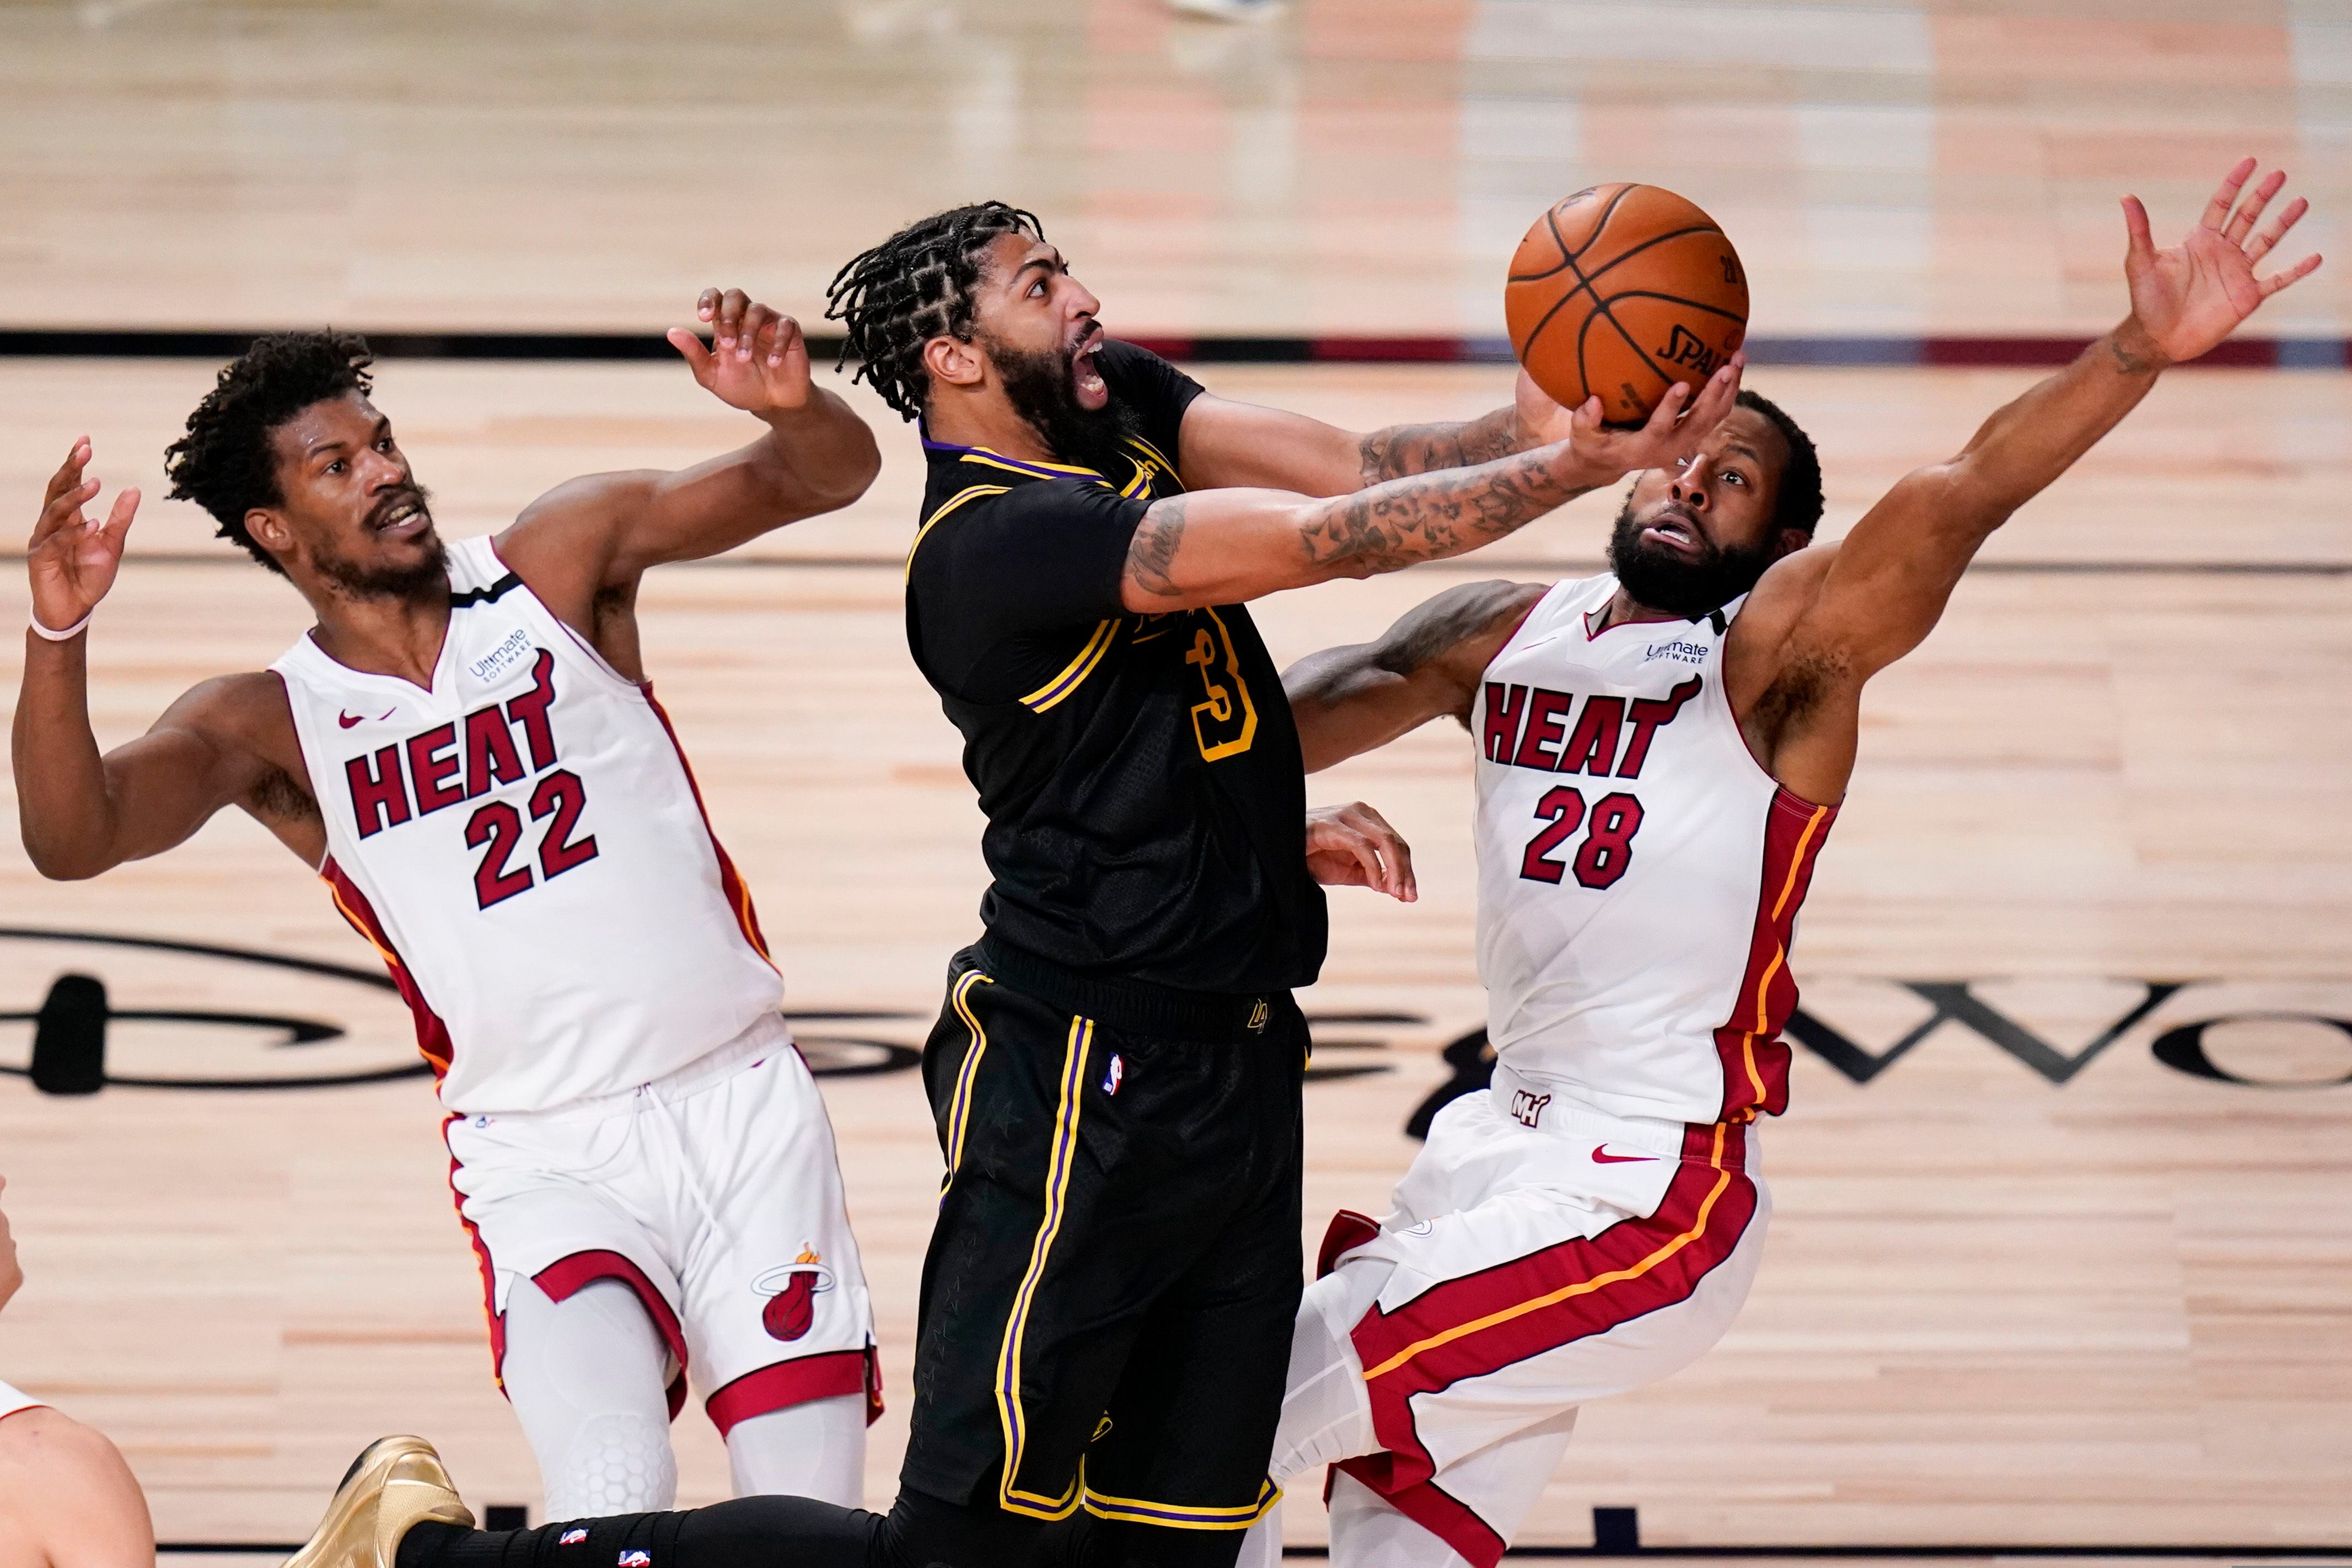 Miami Heat's LeBron James sits between the Larry O'Brien NBA